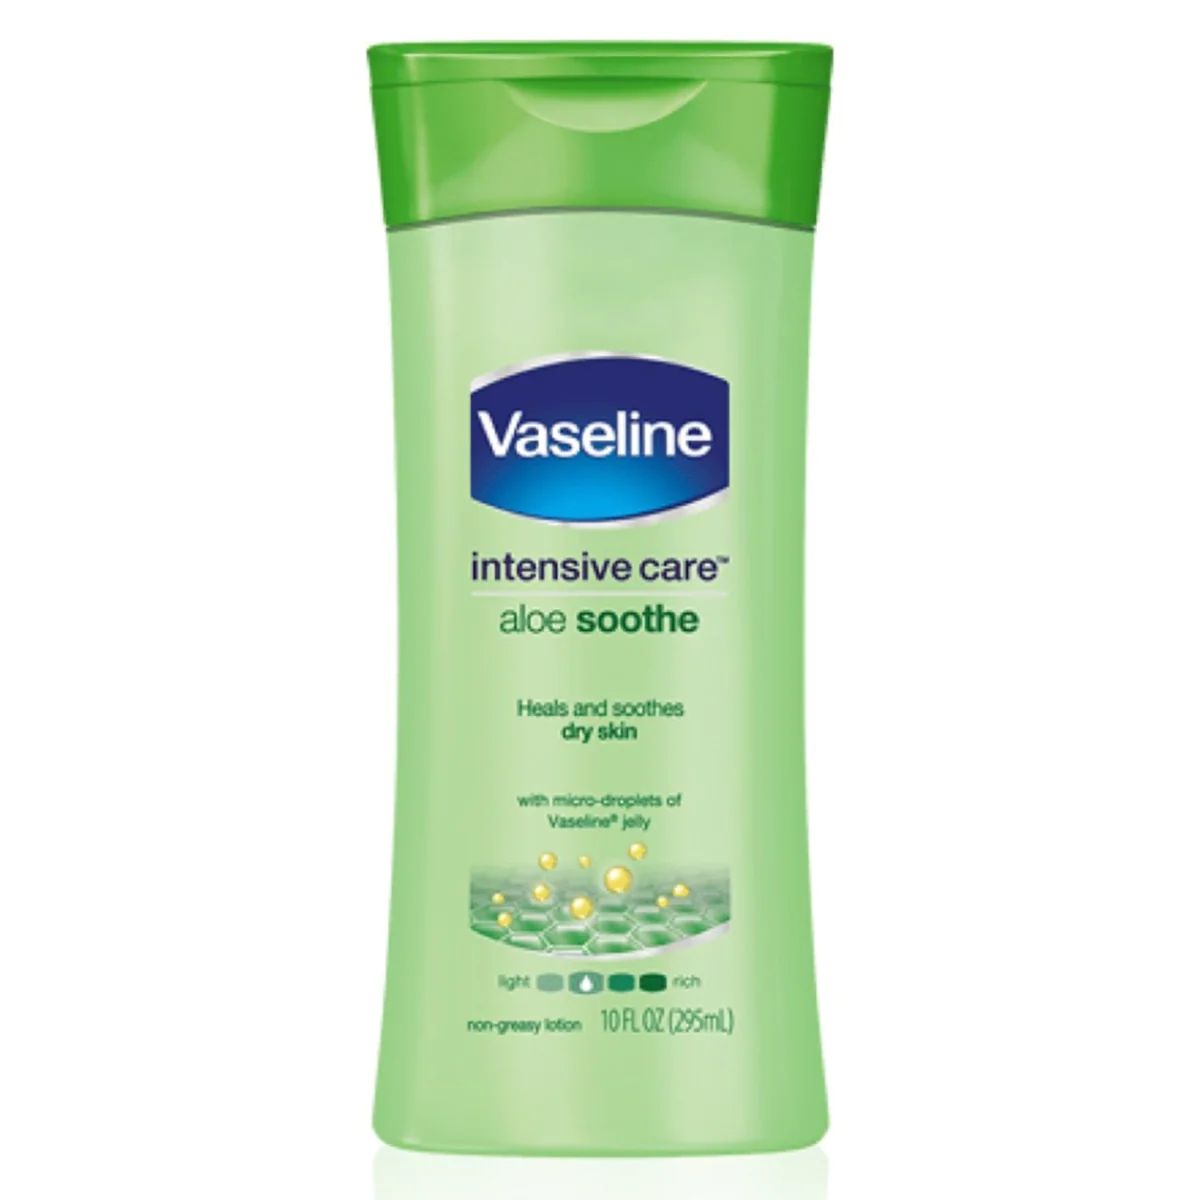 Vaseline - Intensive Care Aloe Soothe Body Lotion - 200ml bottle.